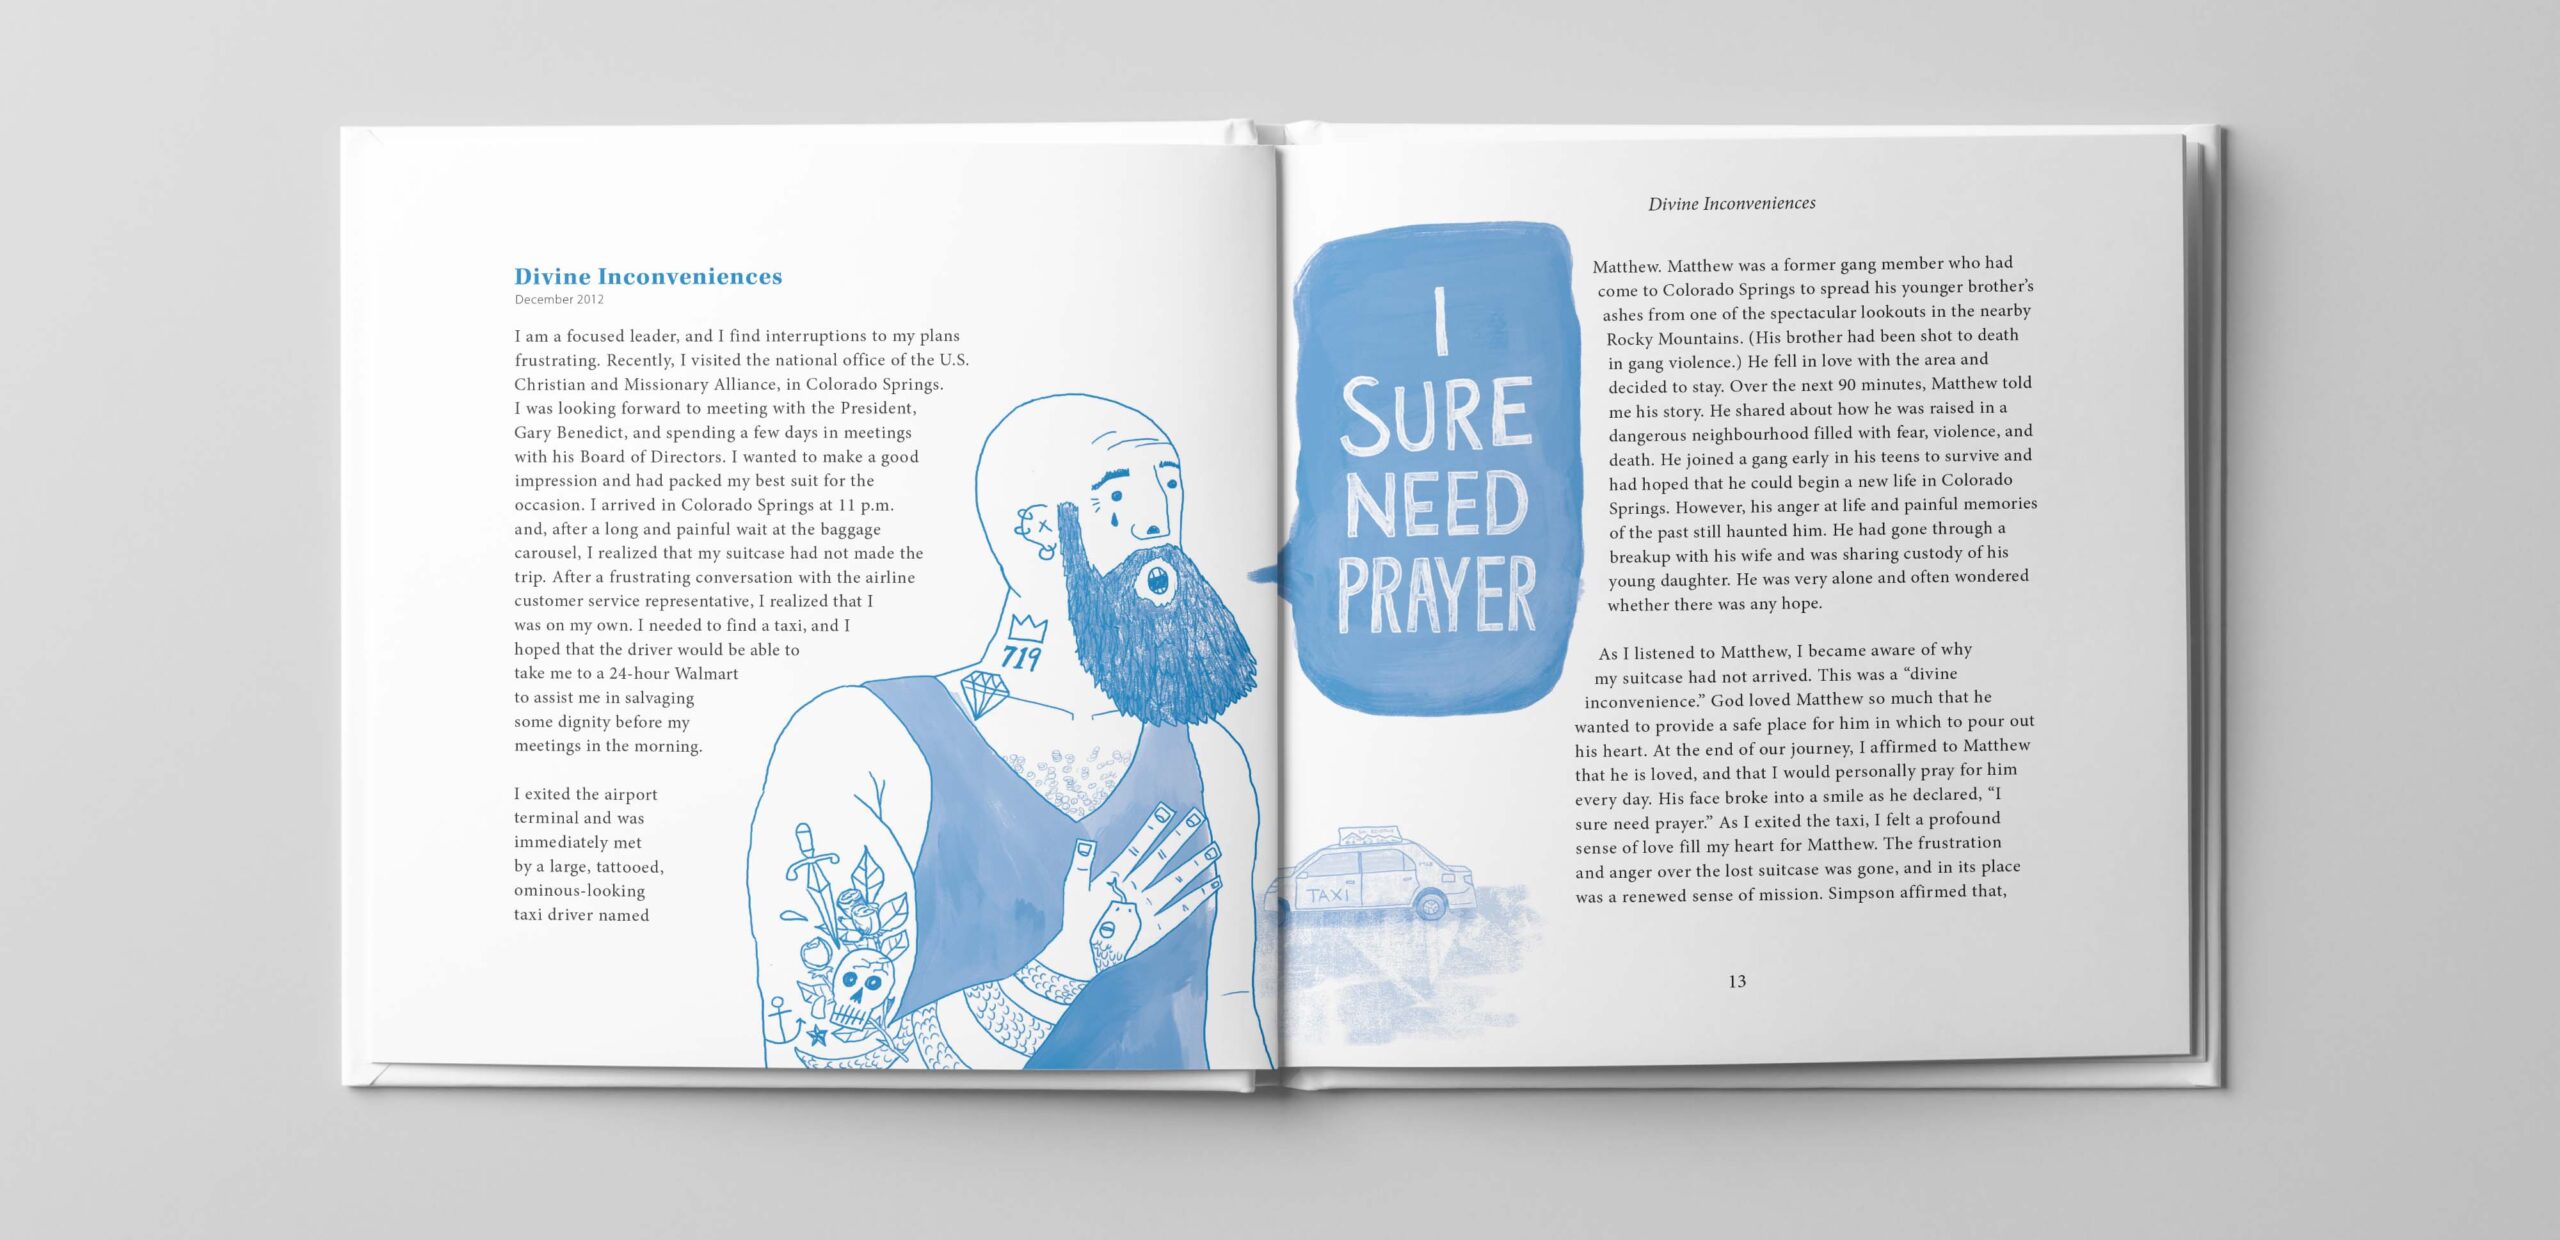 Editorial Illustration of former gang member asking for prayer.